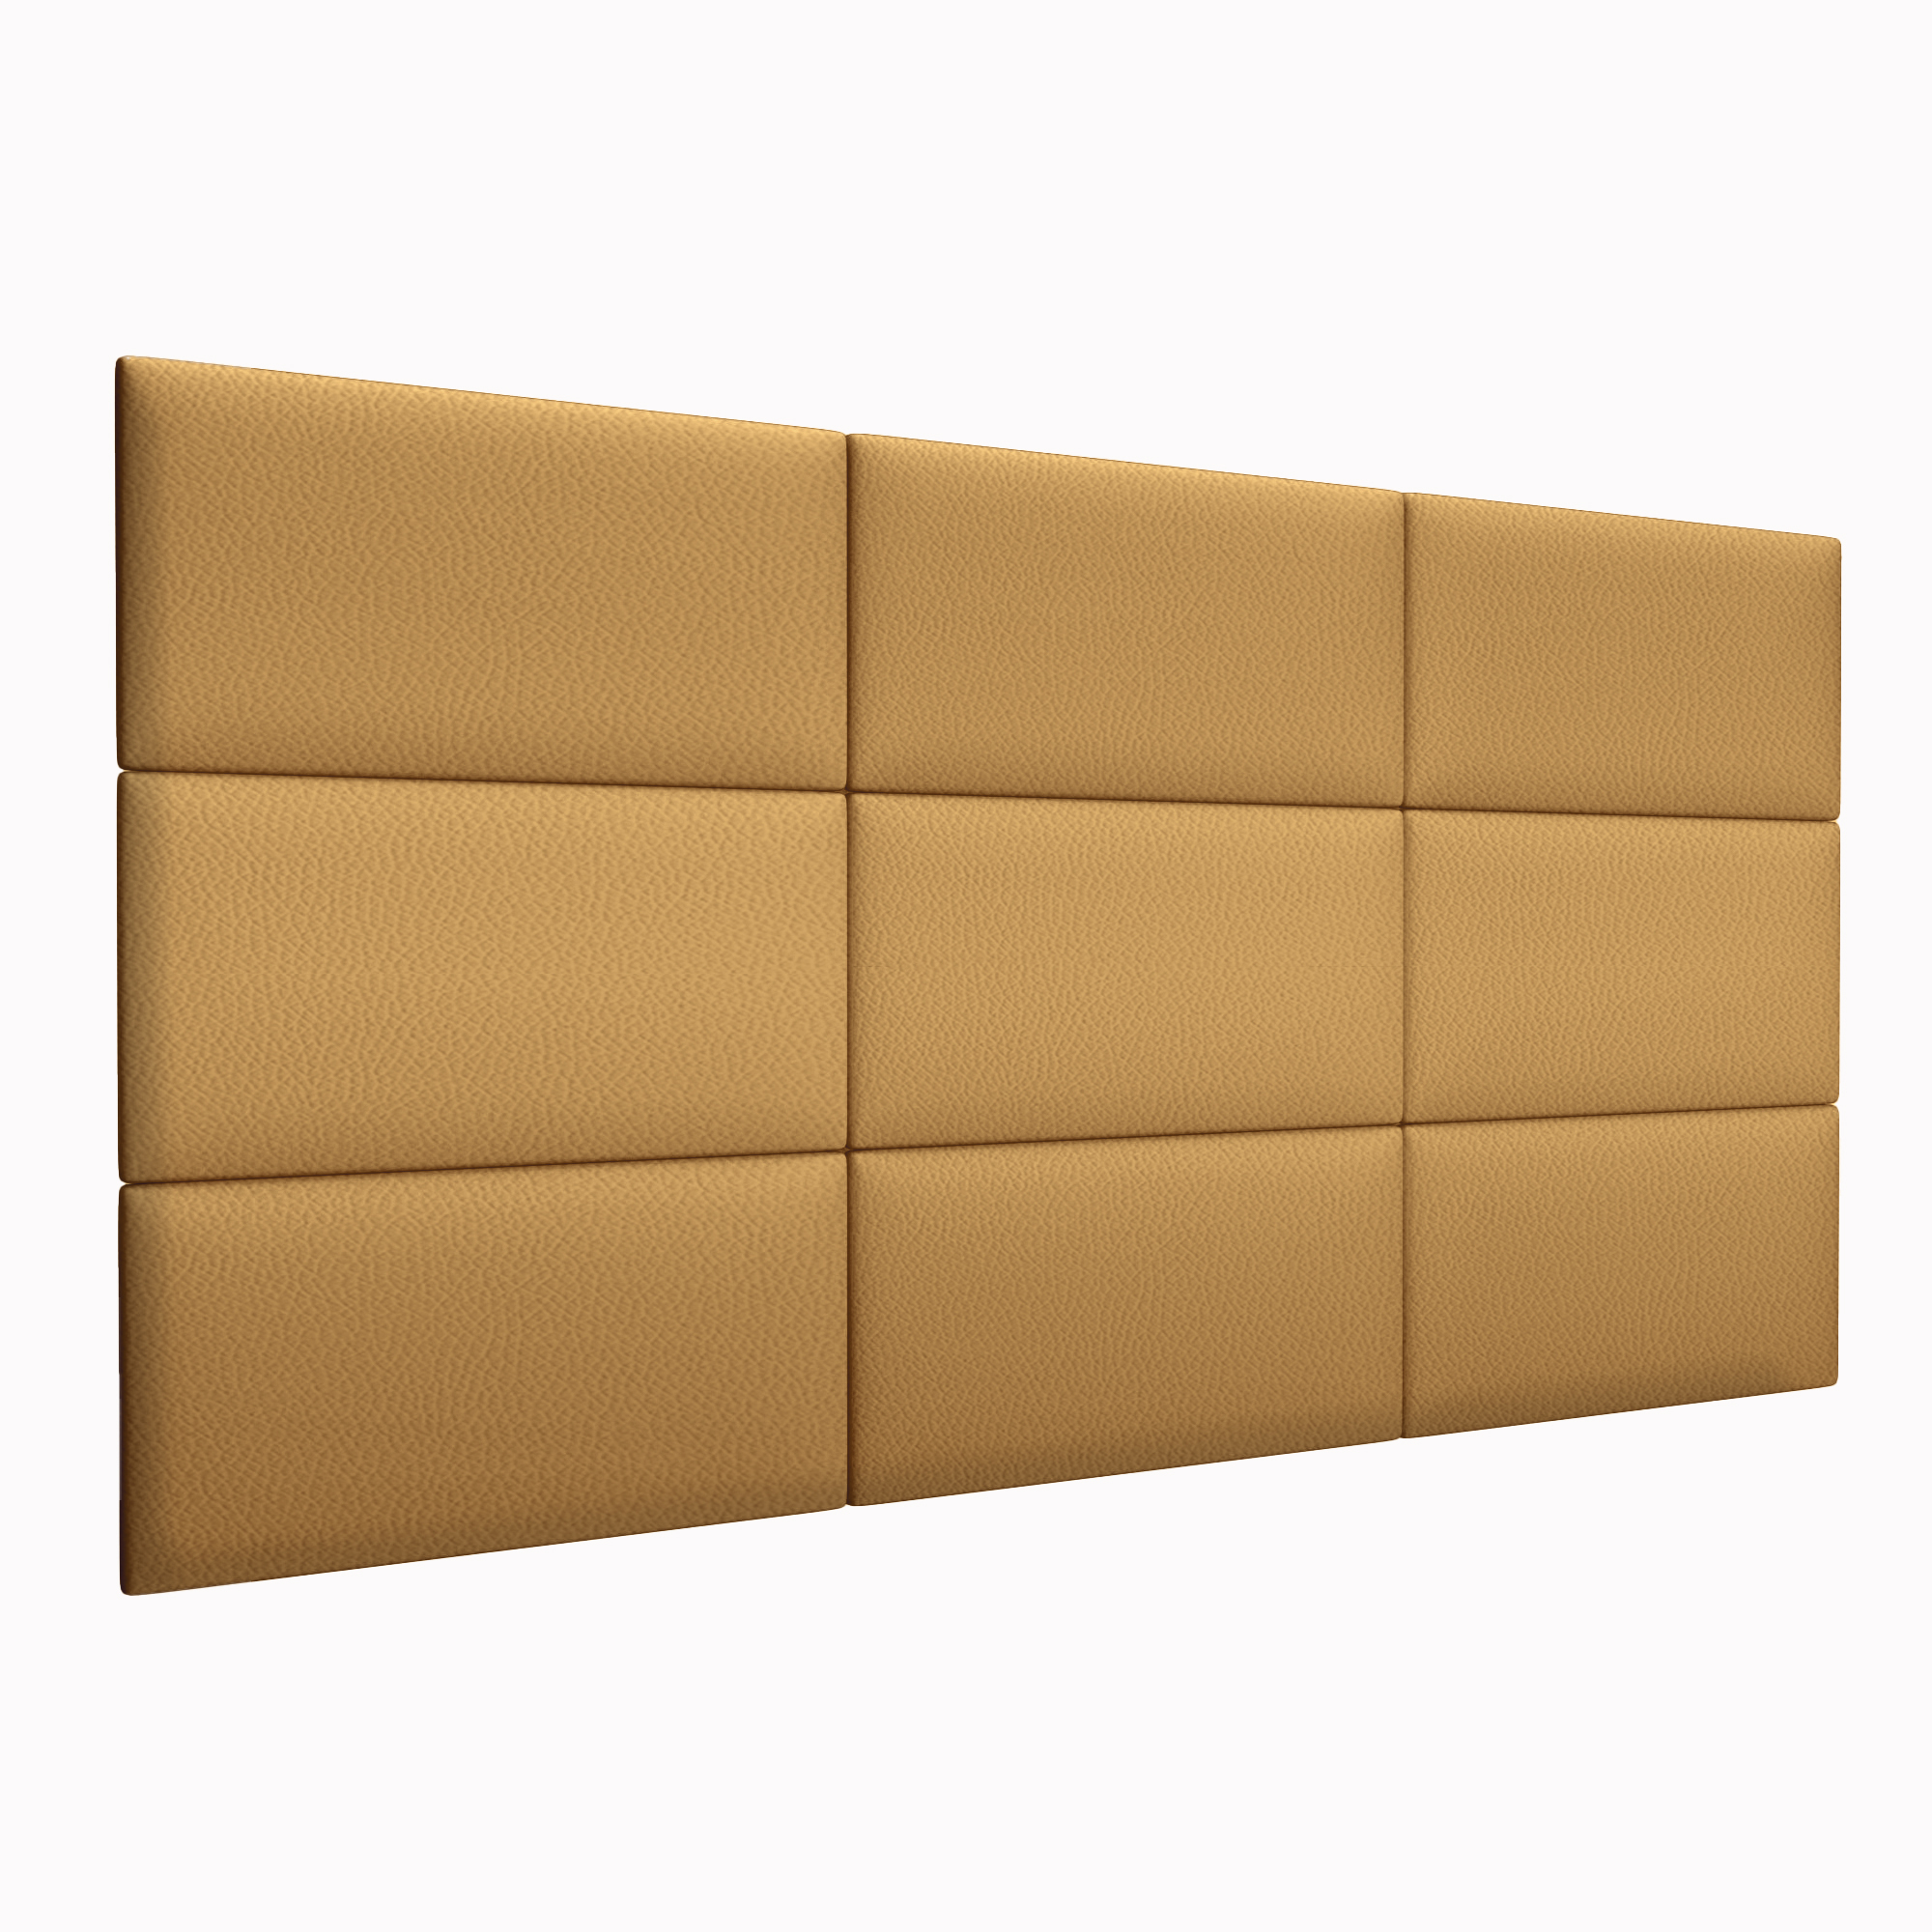 Мягкие обои Eco Leather Gold 30х60 см 2 шт. кубики мягкие домики тм мякиши